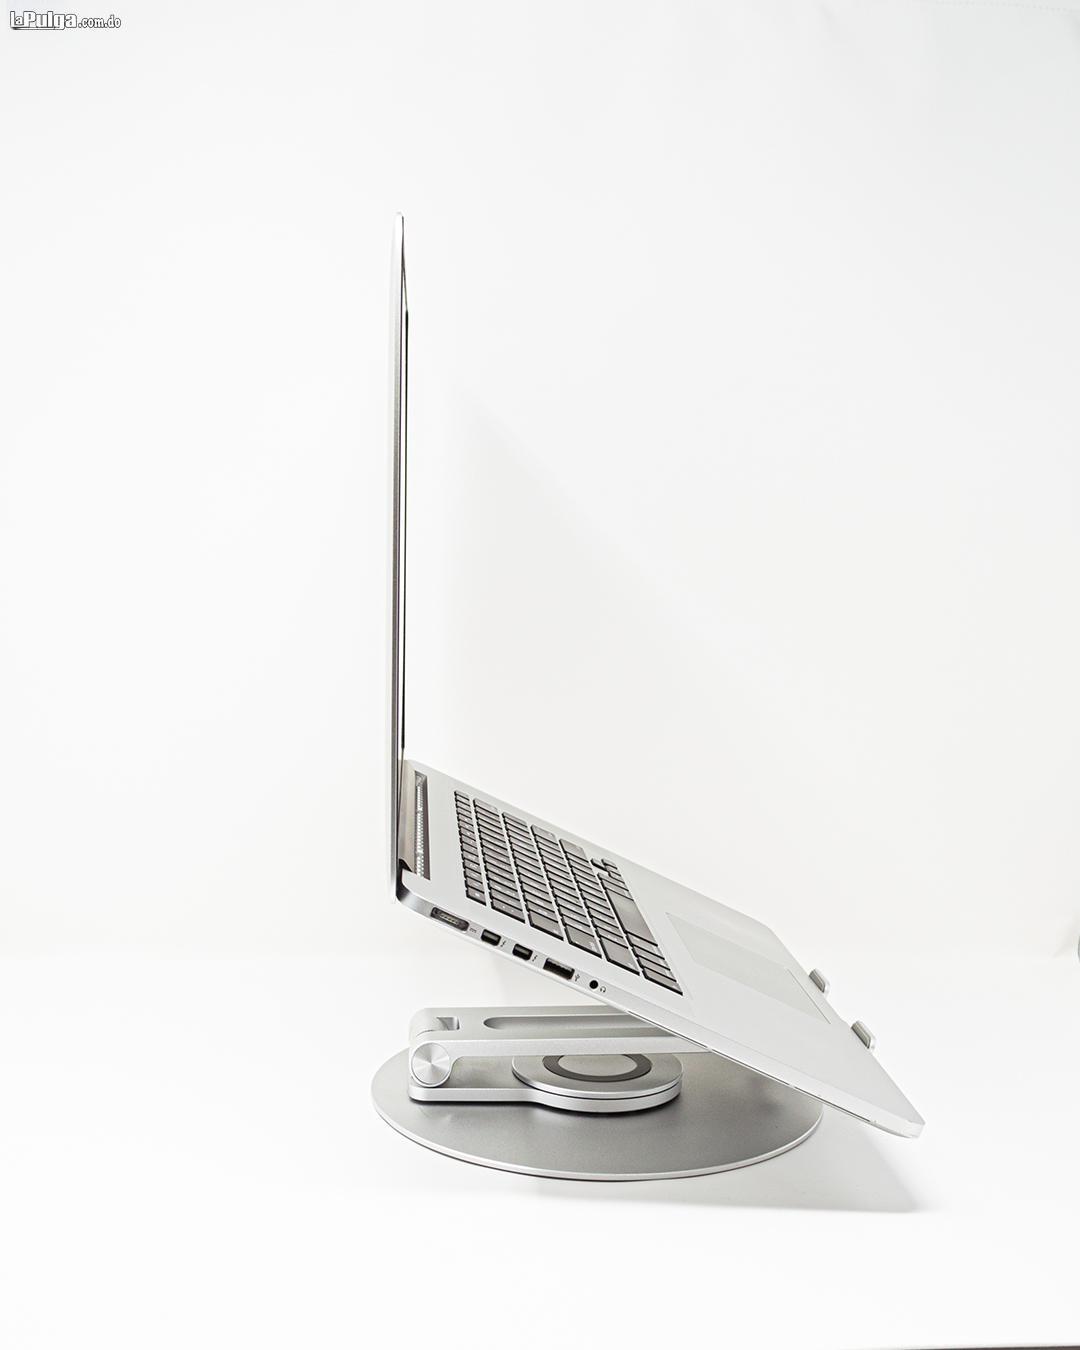 MacBook Pro 15 pulgs 2014 Doble Tarjeta Gráfica Foto 7130223-4.jpg